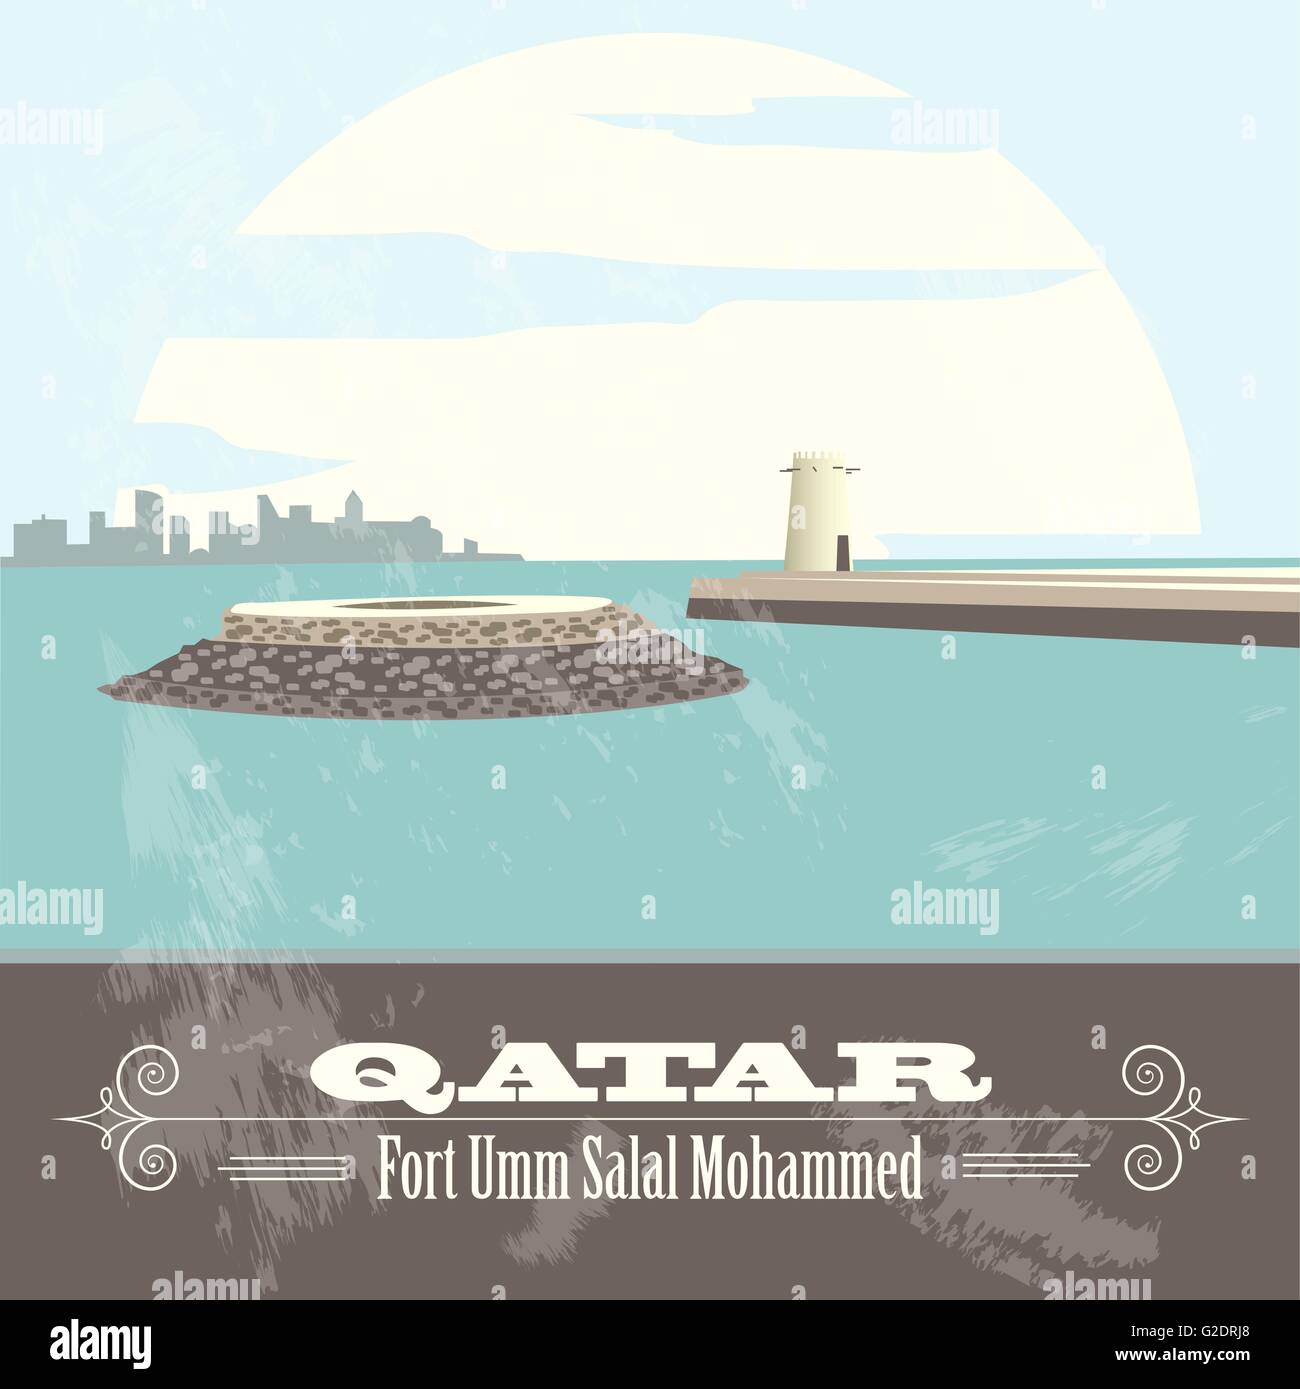 Qatar. Retro styled image. Fort Umm Salal Mohammed. Vector illustration Stock Vector